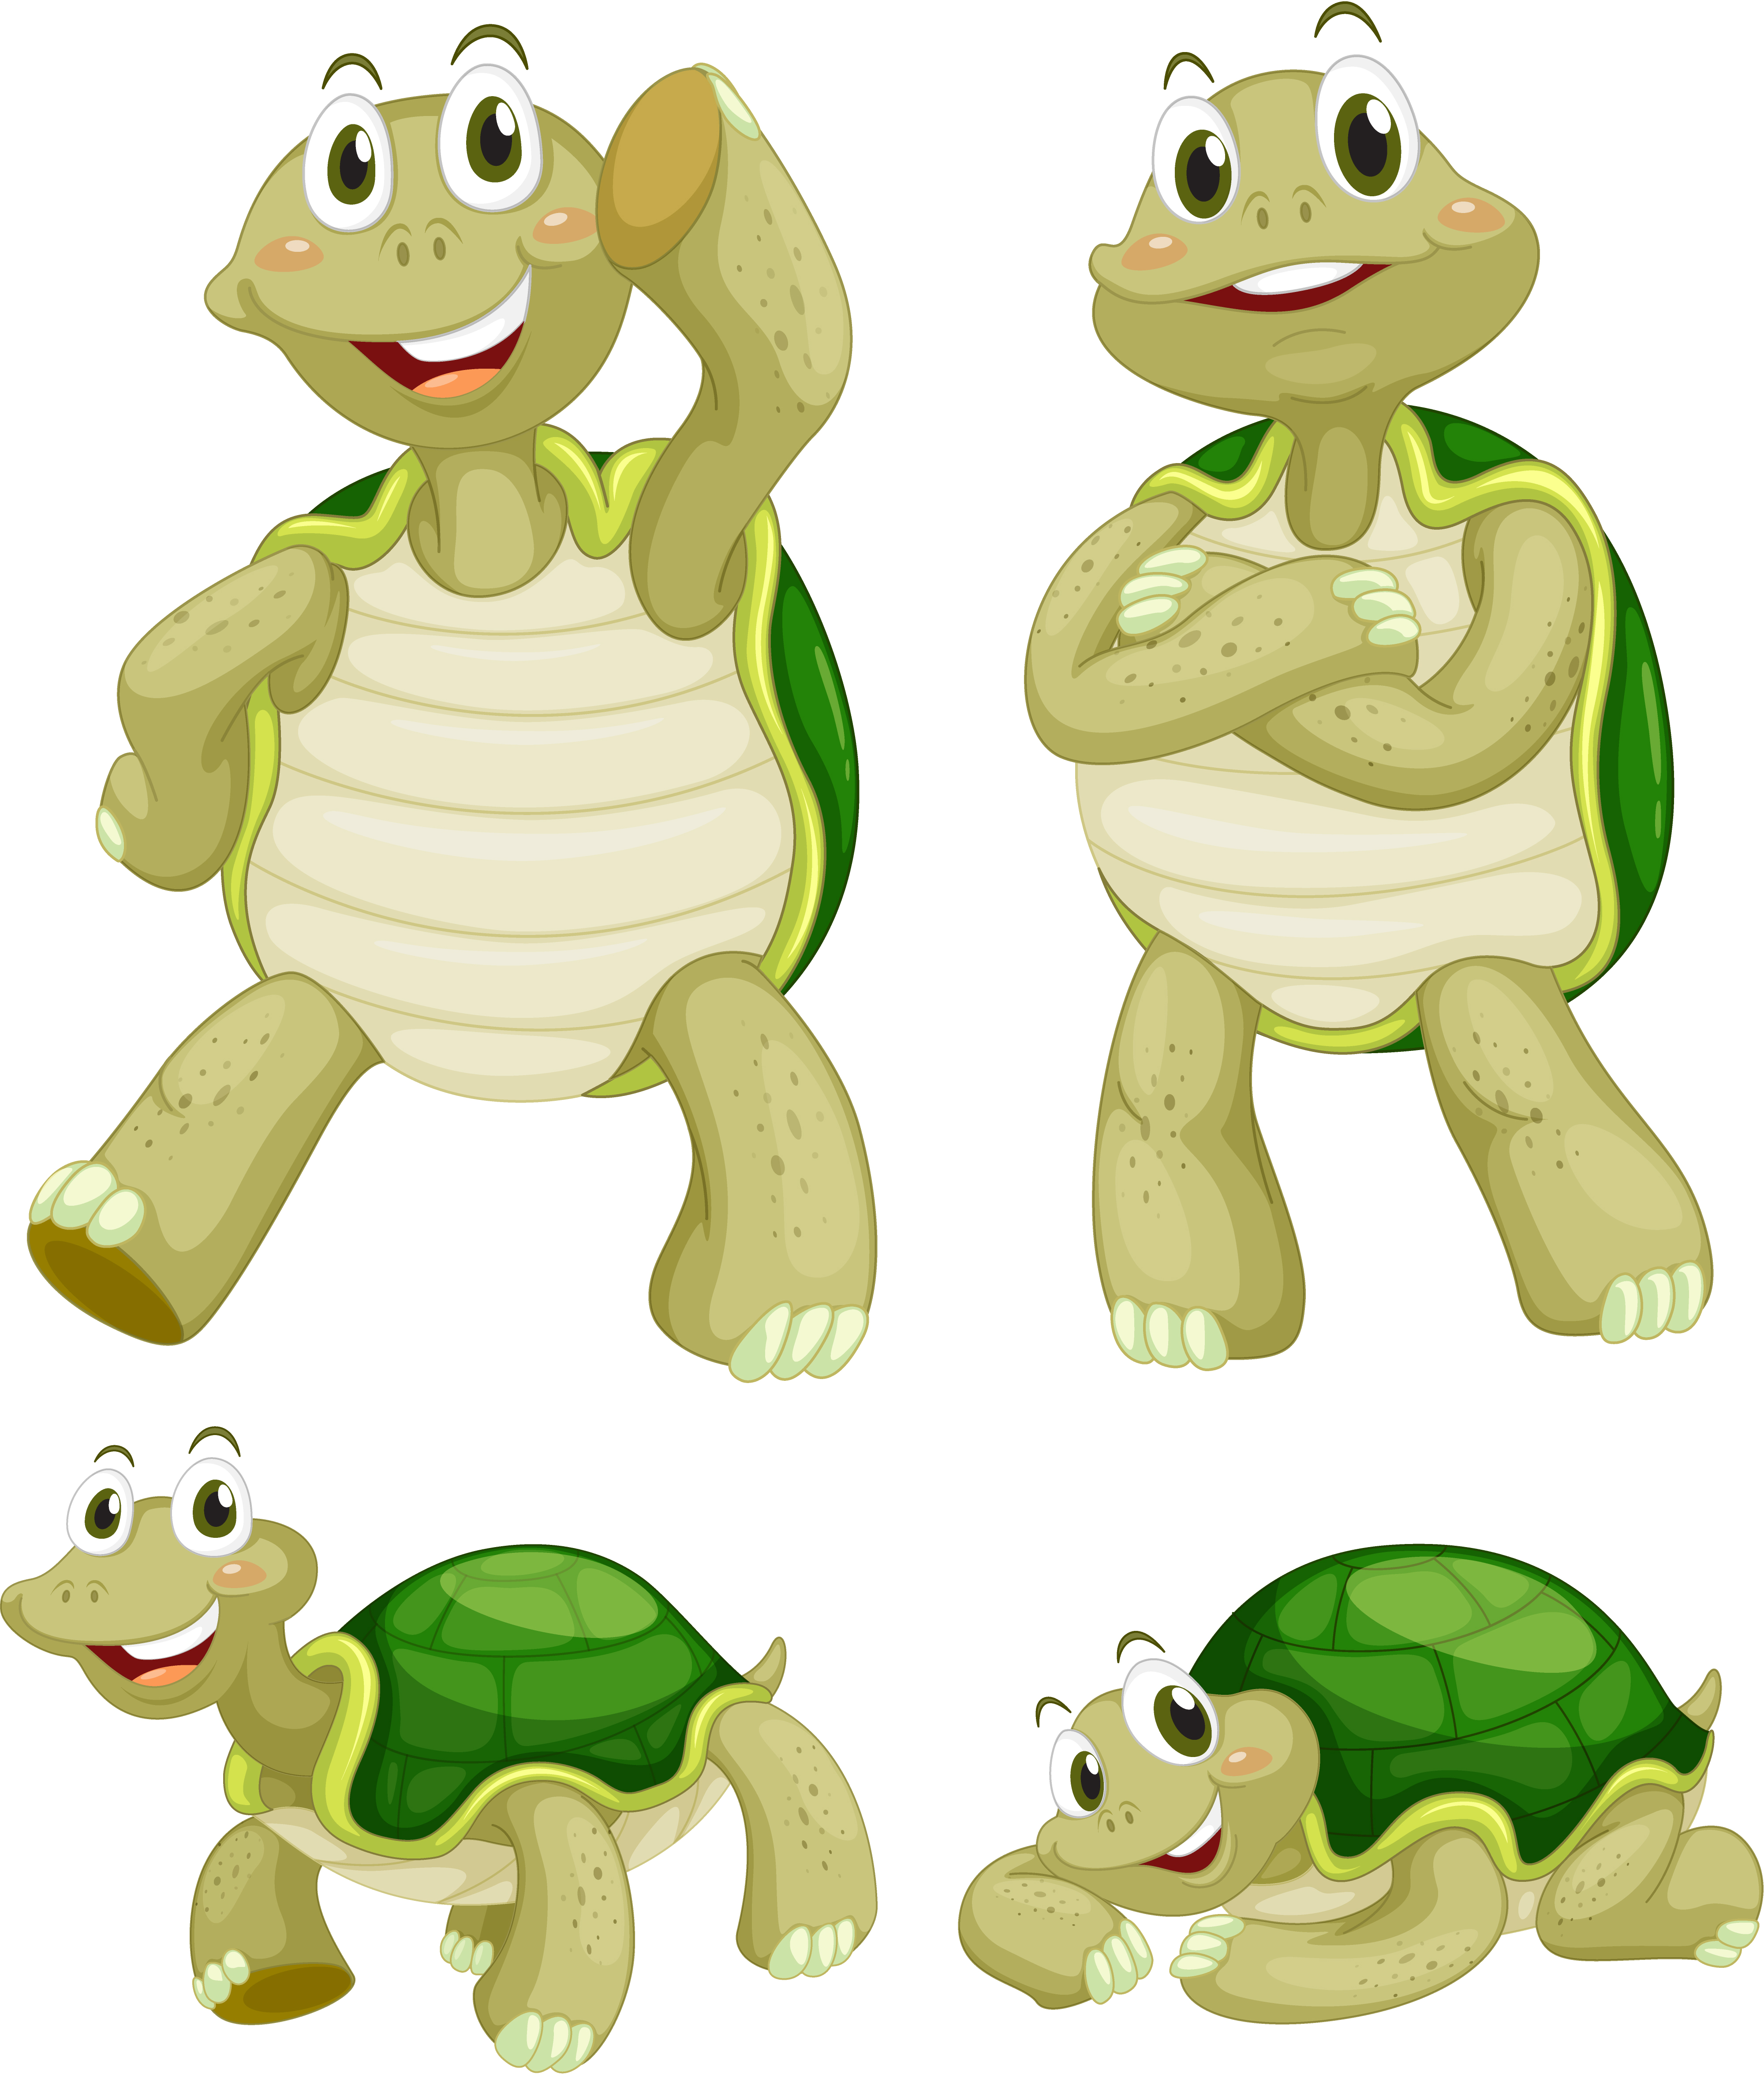 Turtles 417809 Download Free Vectors, Clipart Graphics